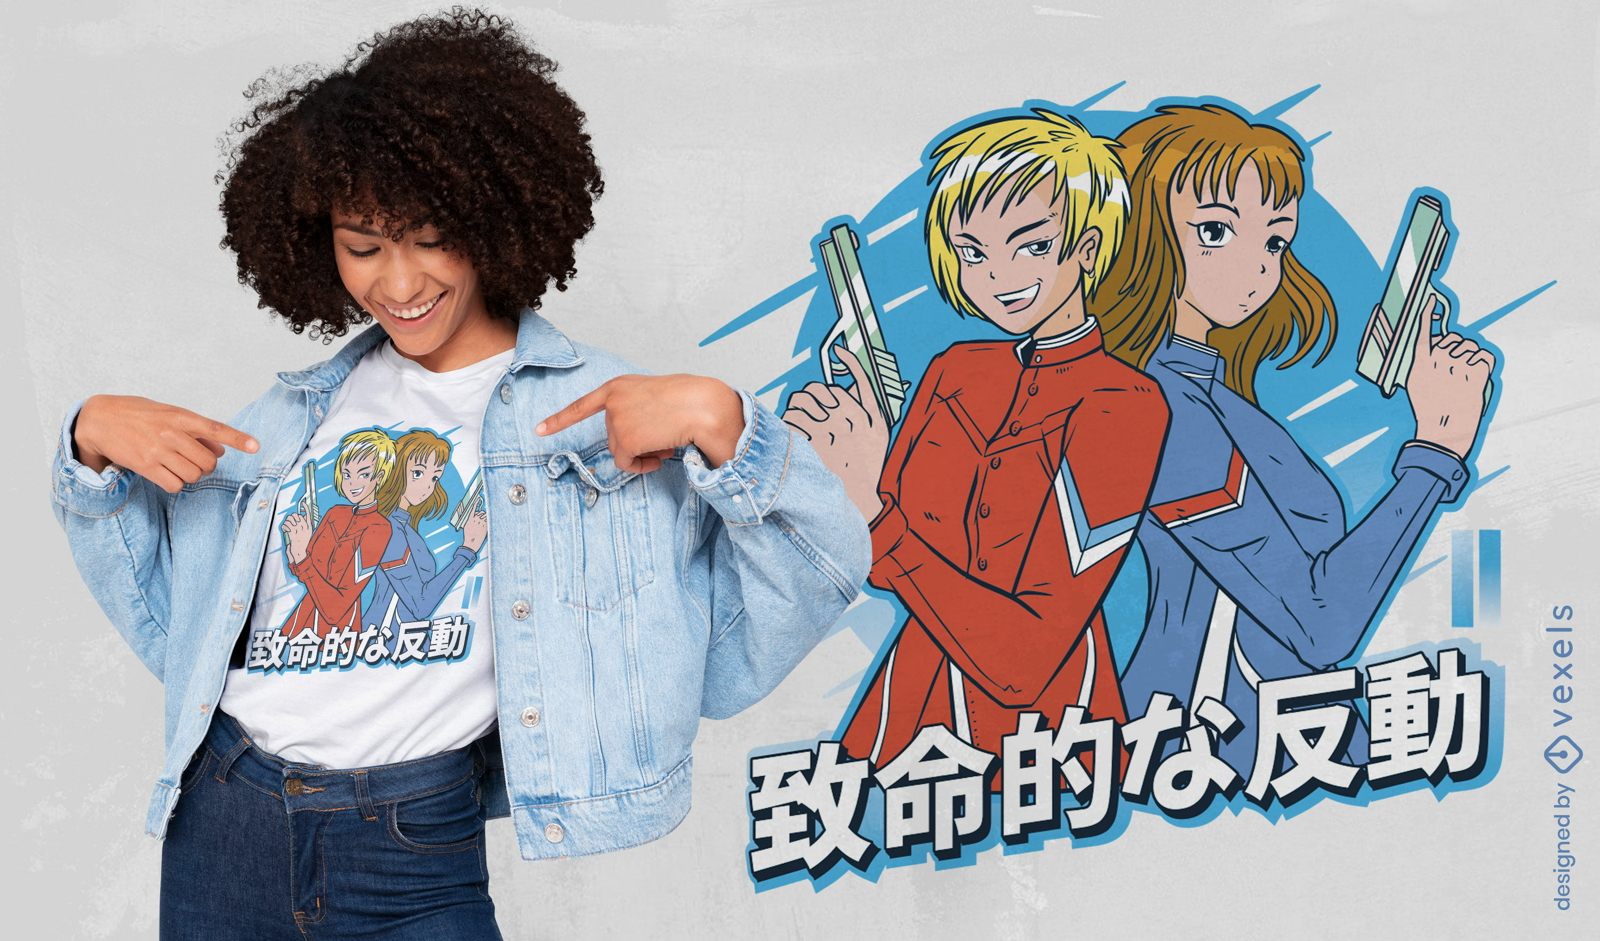 Anime girls with guns t-shirt design